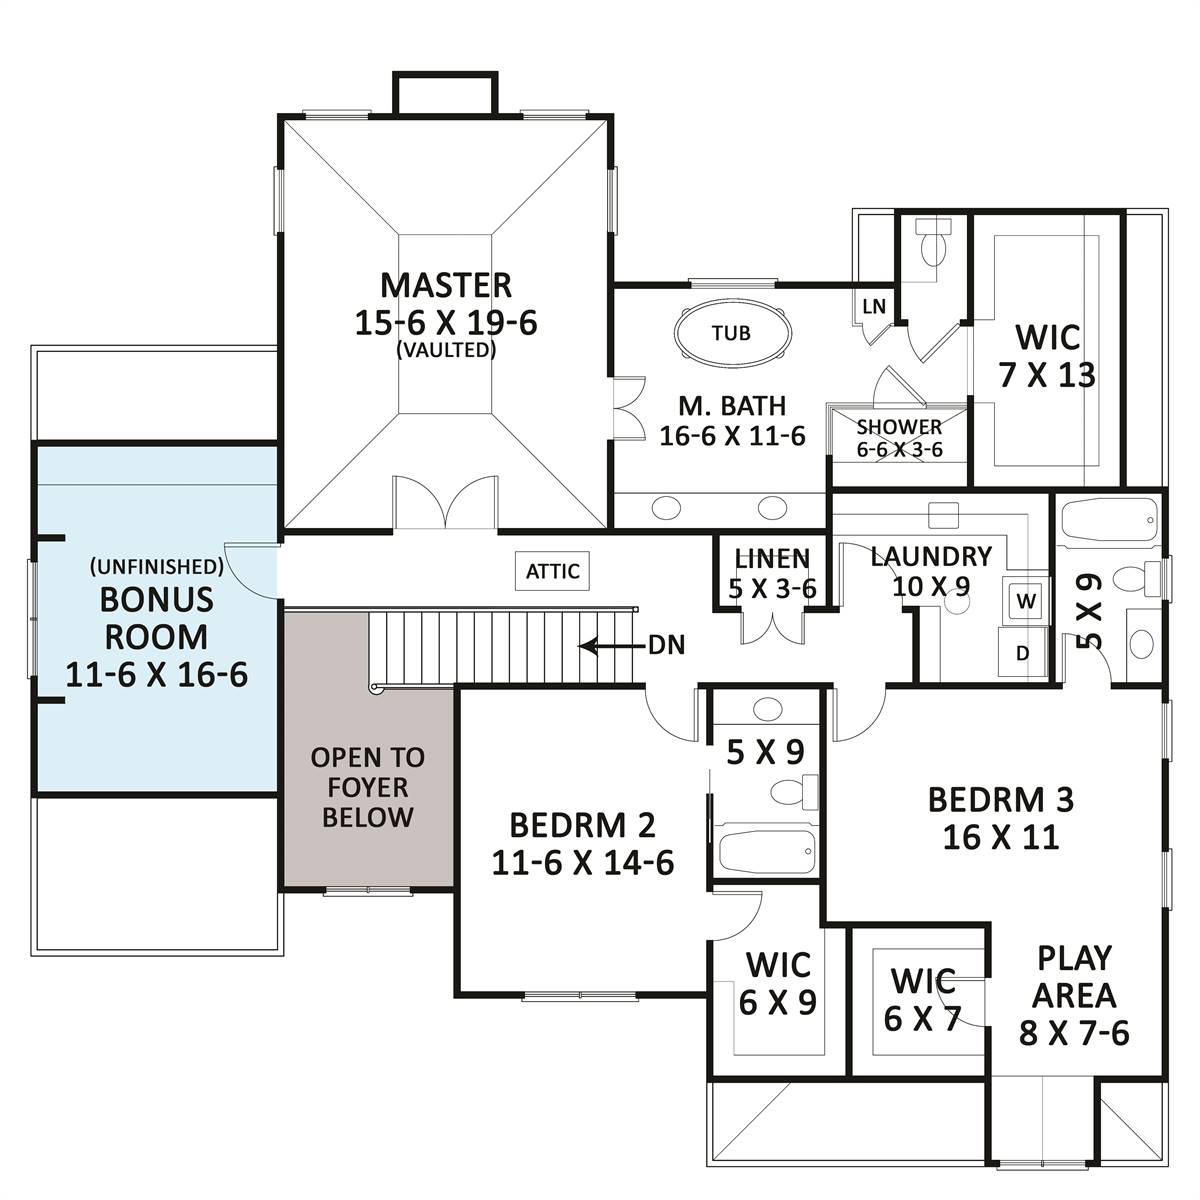 2nd Floor Plan Featuring Vaulted Primary Bedroom Ceiling